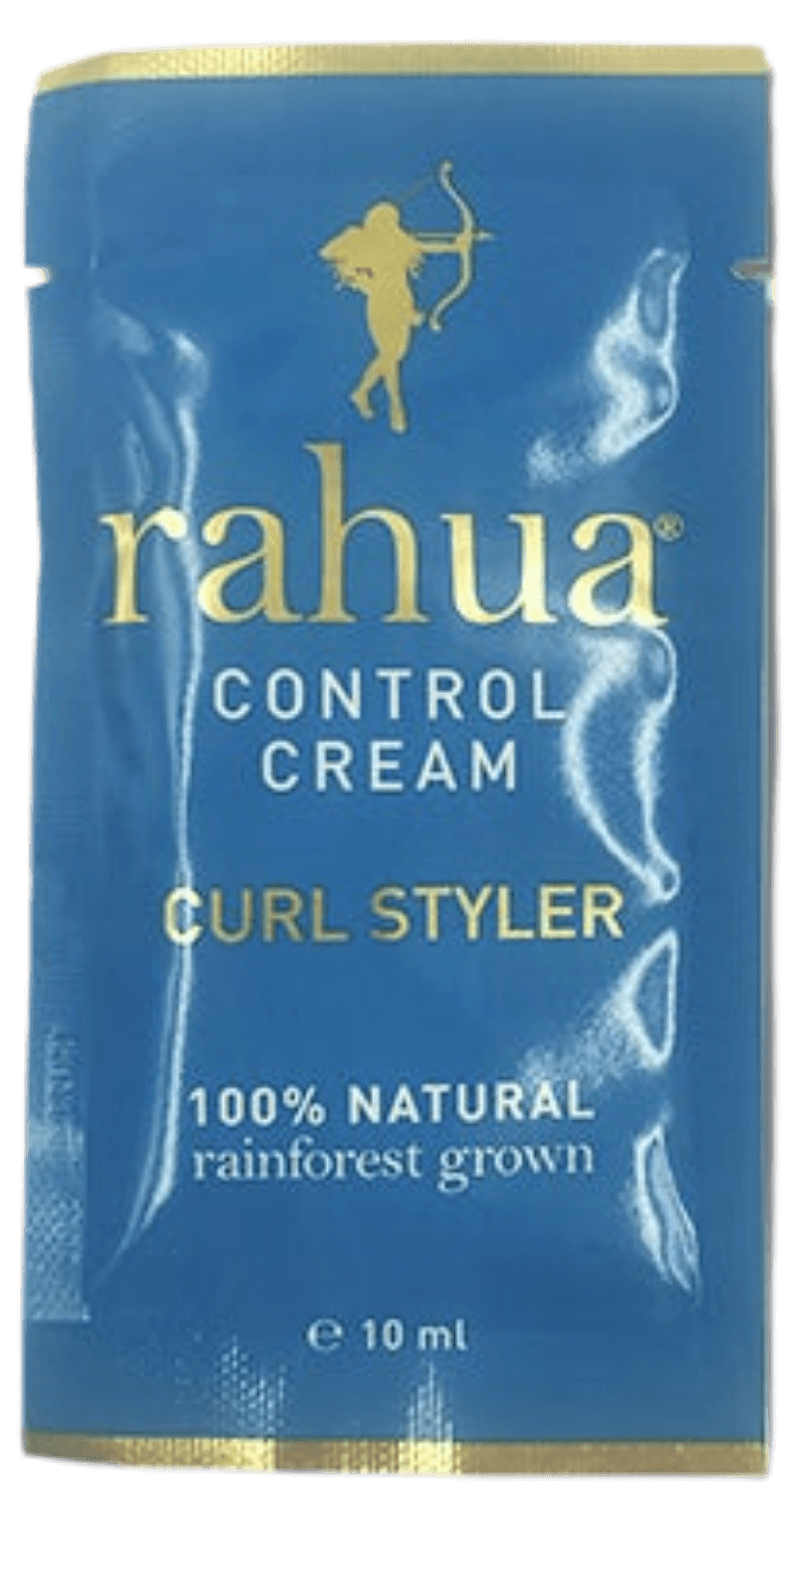 &#39;s Rahua Curl Styler Control Cream Sample - Bellini&#39;s Skin and Parfumerie 